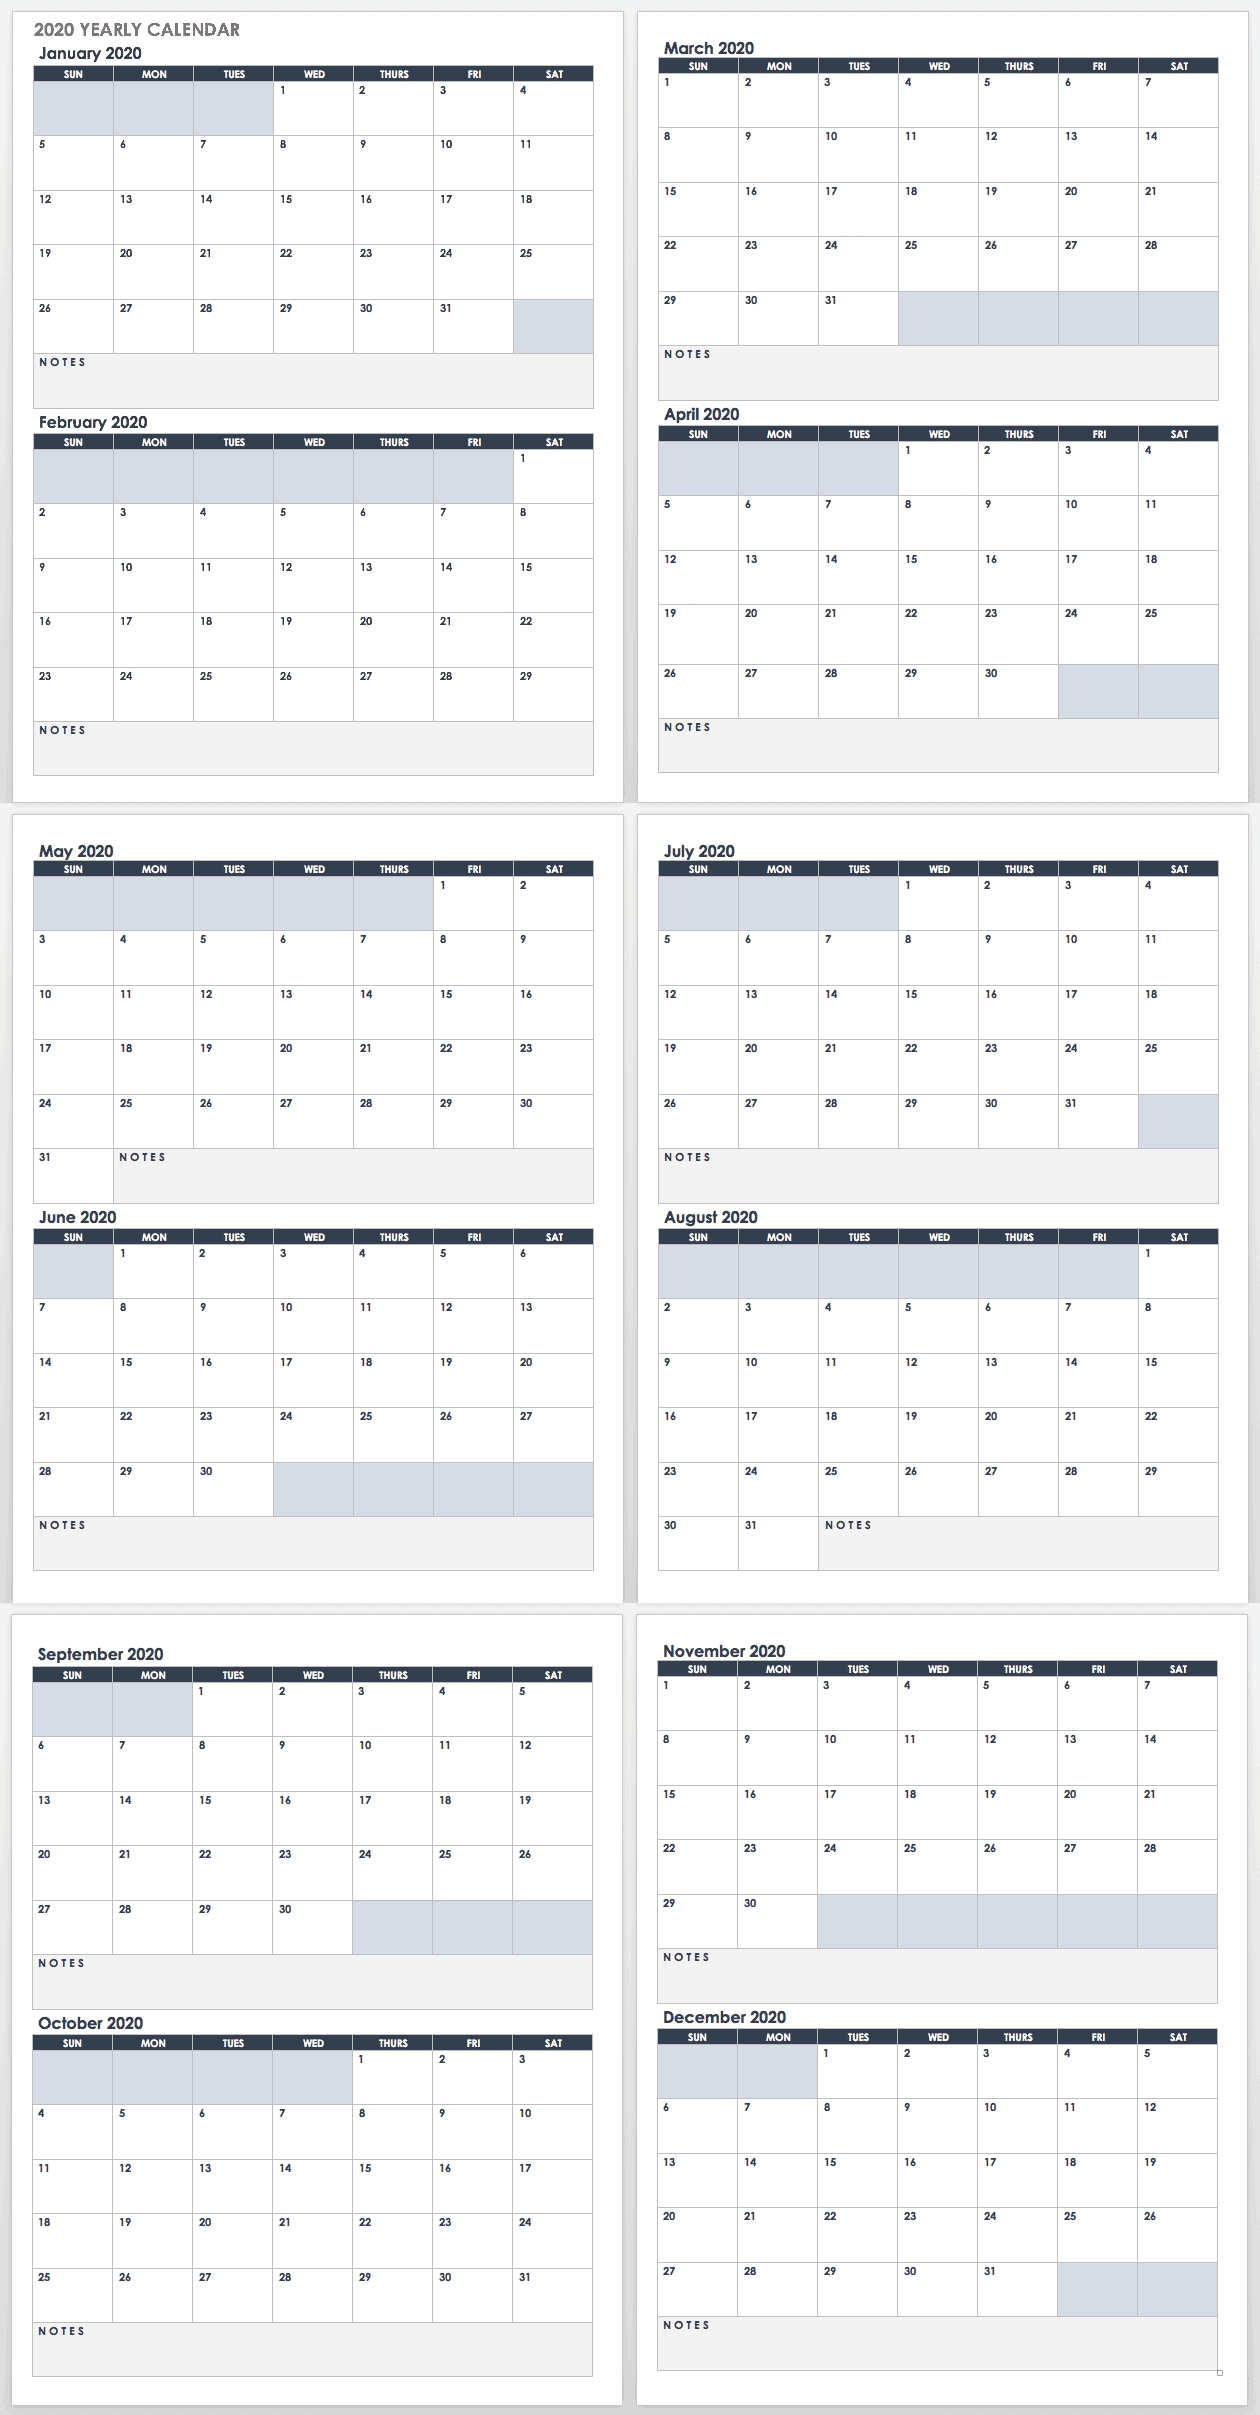 Free Google Calendar Templates | Smartsheet regarding Employee Attendance Calendar 2020 Printable